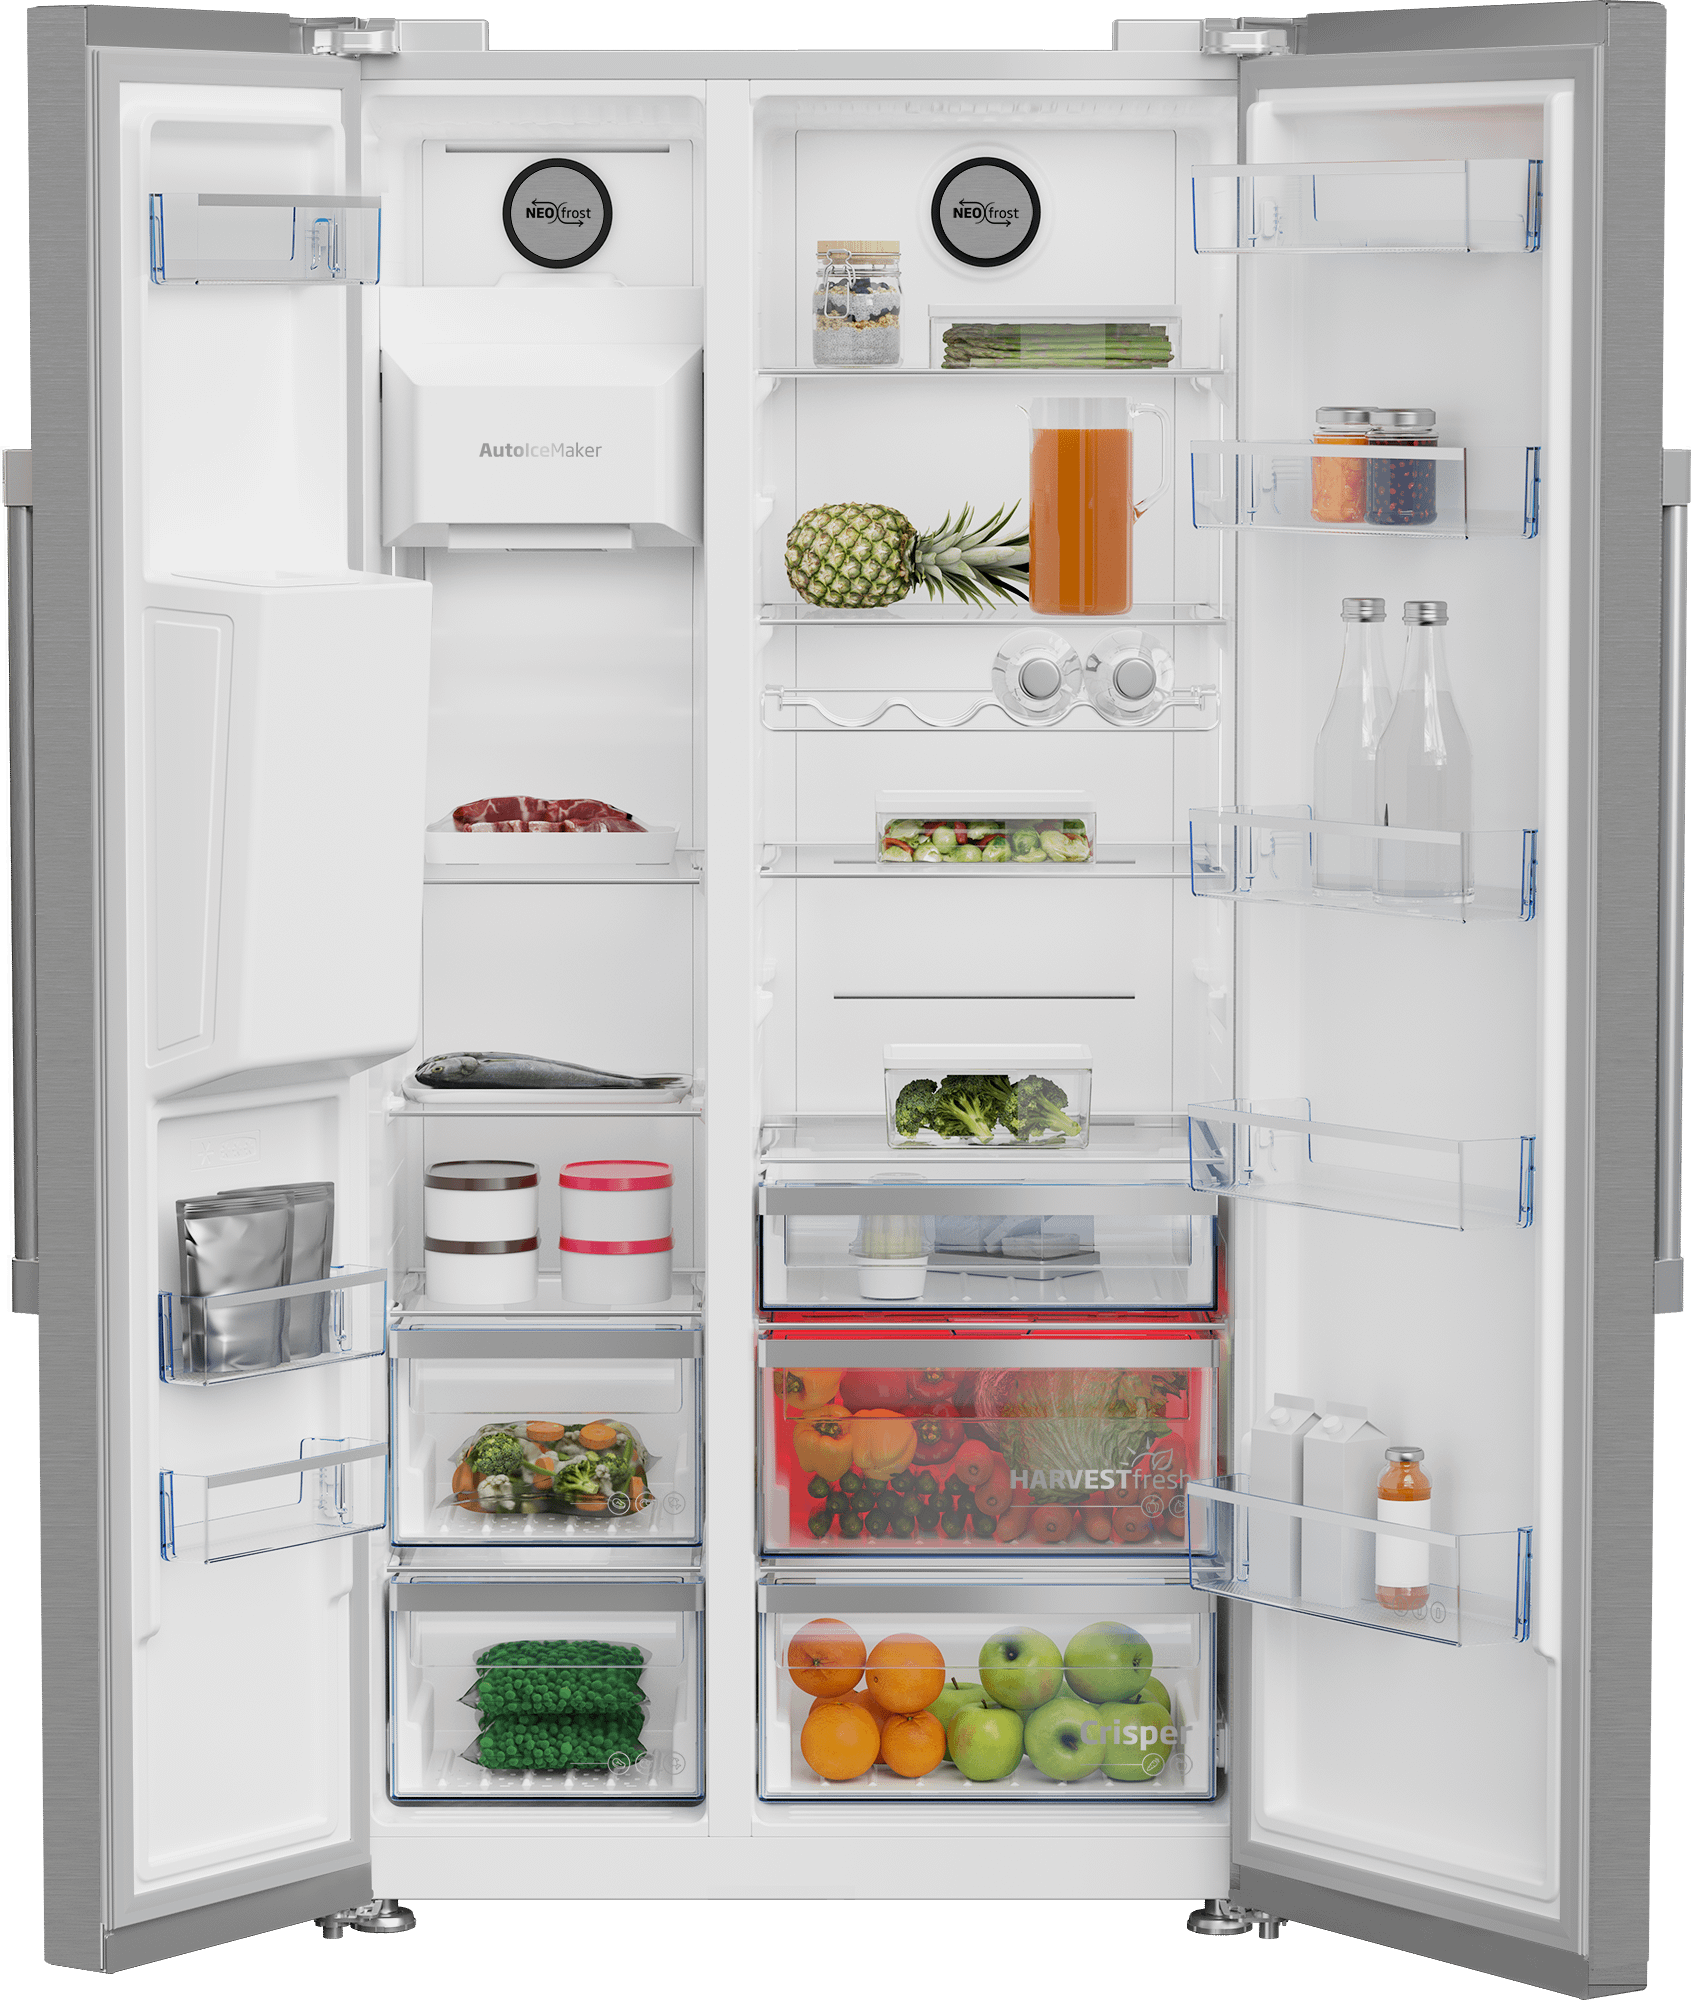 Beko 36" Side by Side Refrigerator with Harvestfresh